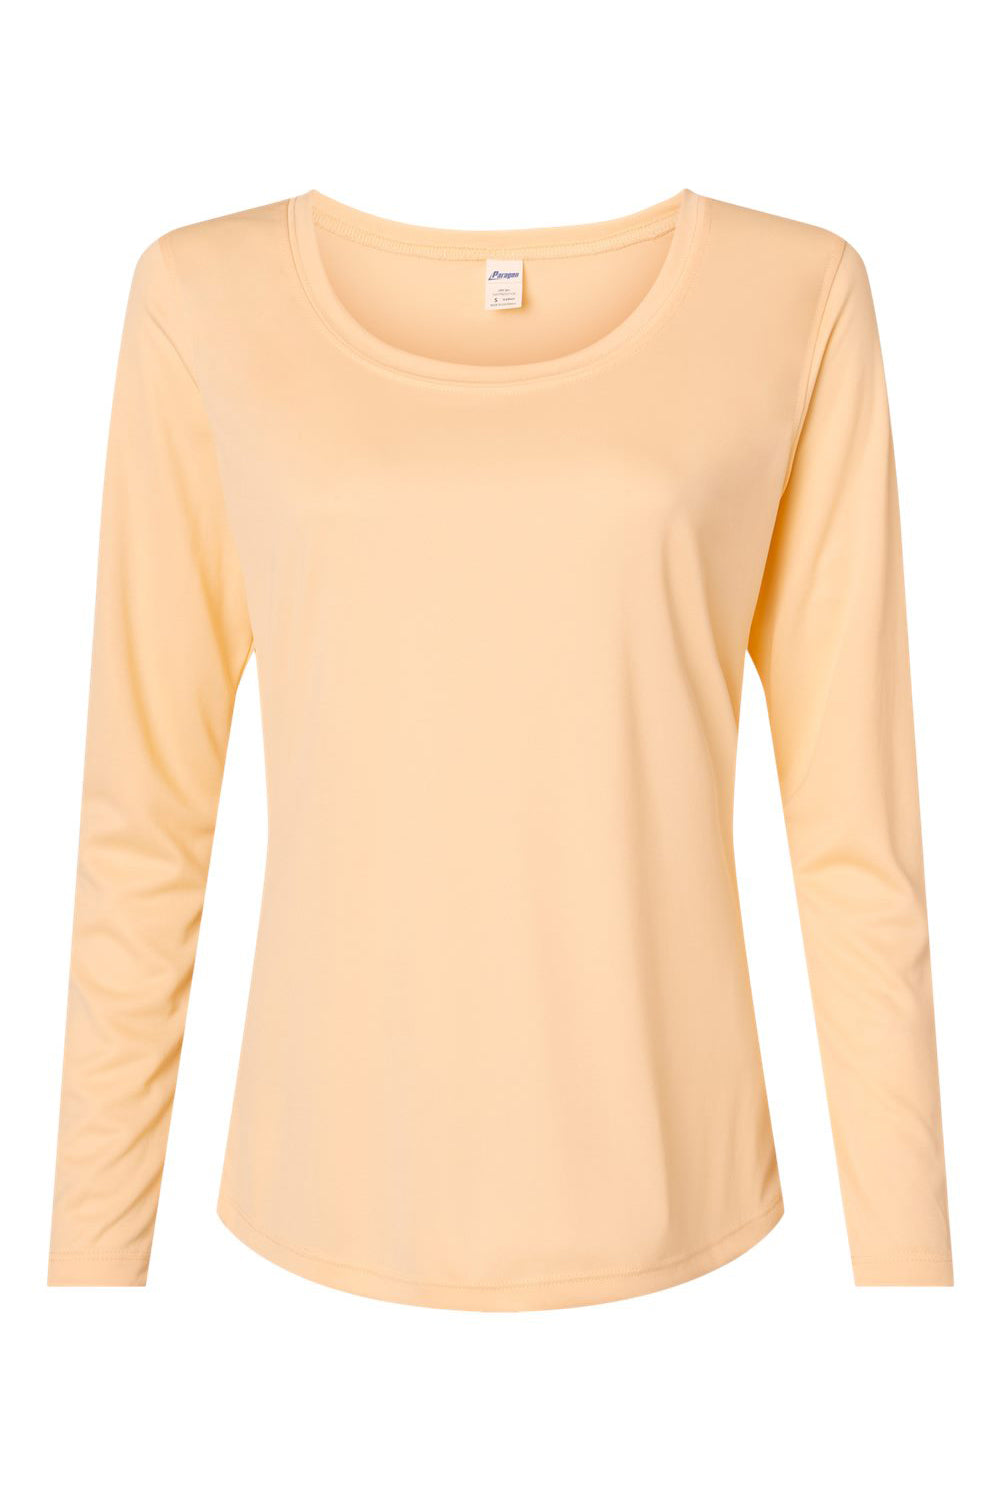 Paragon 214 Womens Islander Performance Long Sleeve Scoop Neck T-Shirt Peach Flat Front